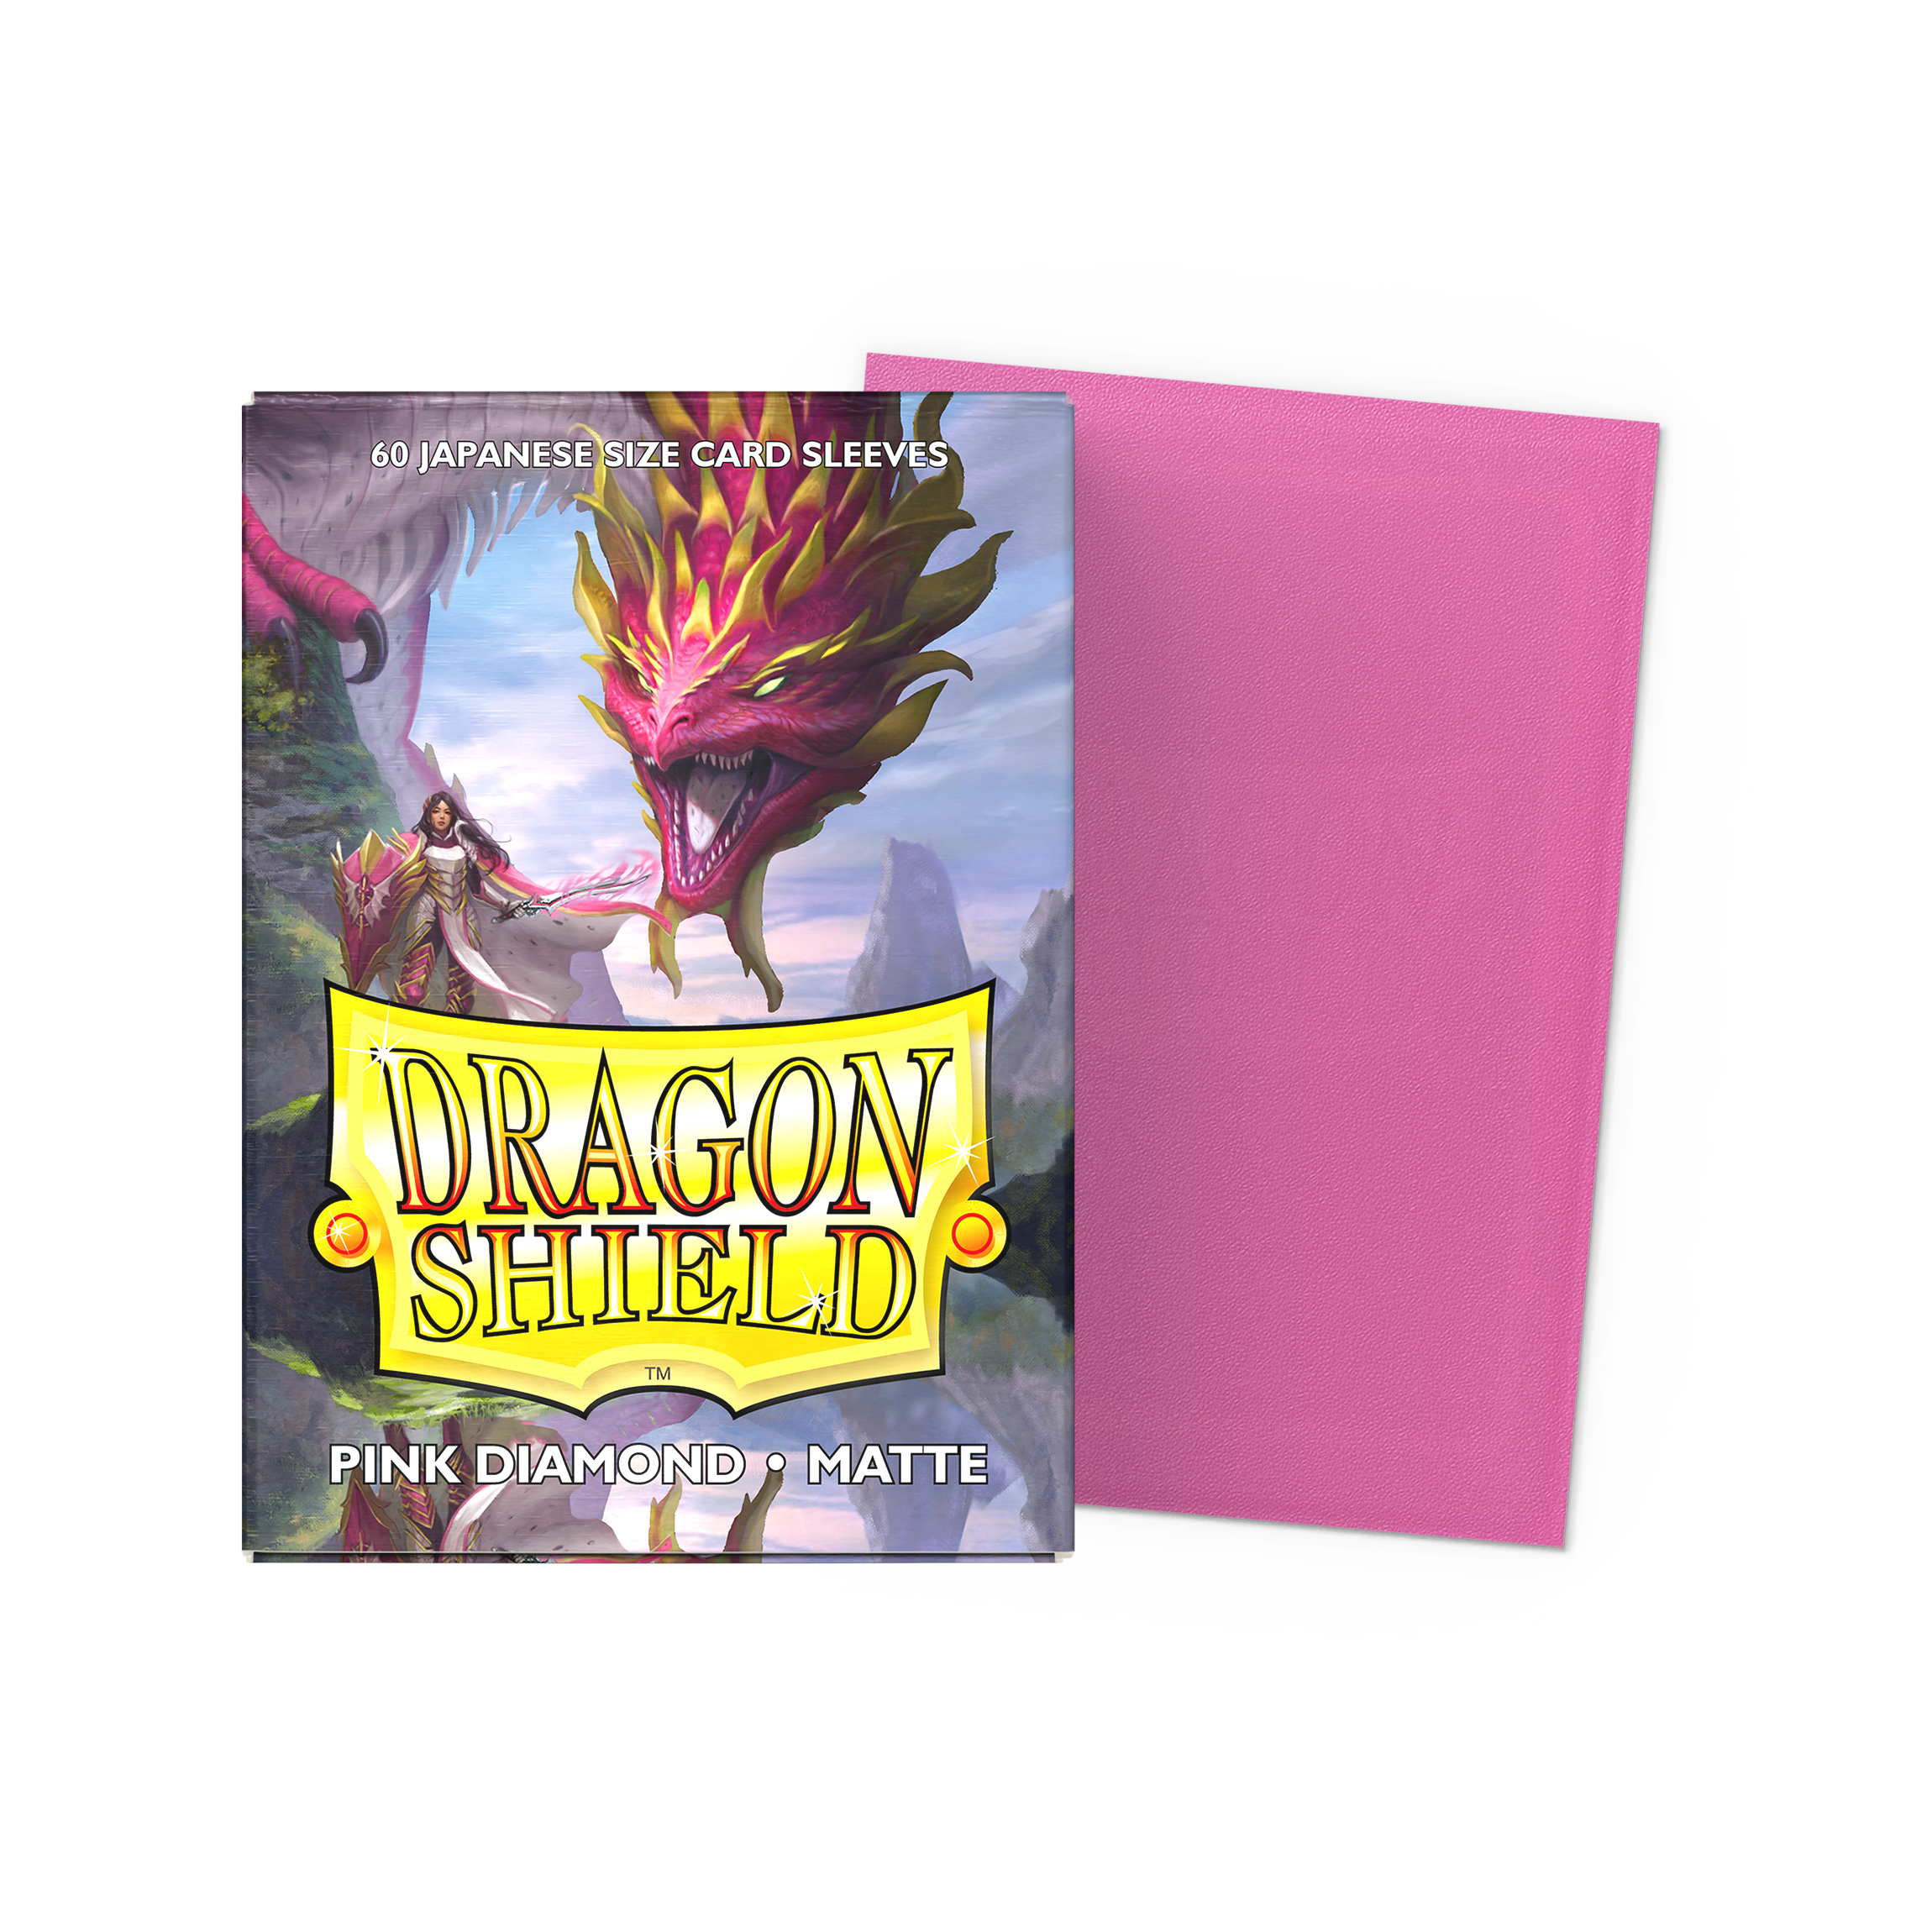 Dragon Shield  Matte Card Sleeves: Get that perfect shuffle feel